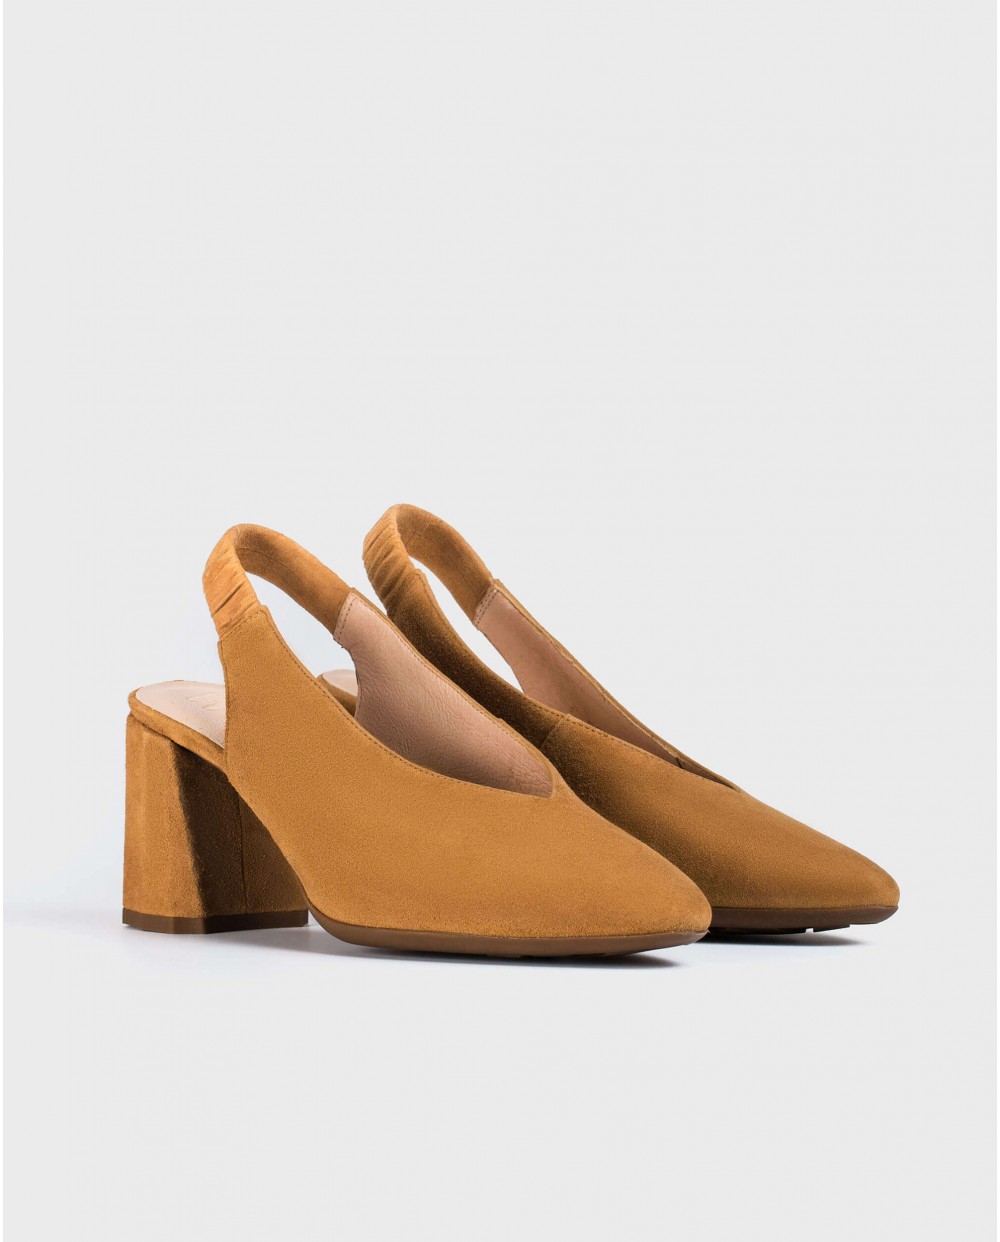 Wonders-Heels-V cut leather court shoe